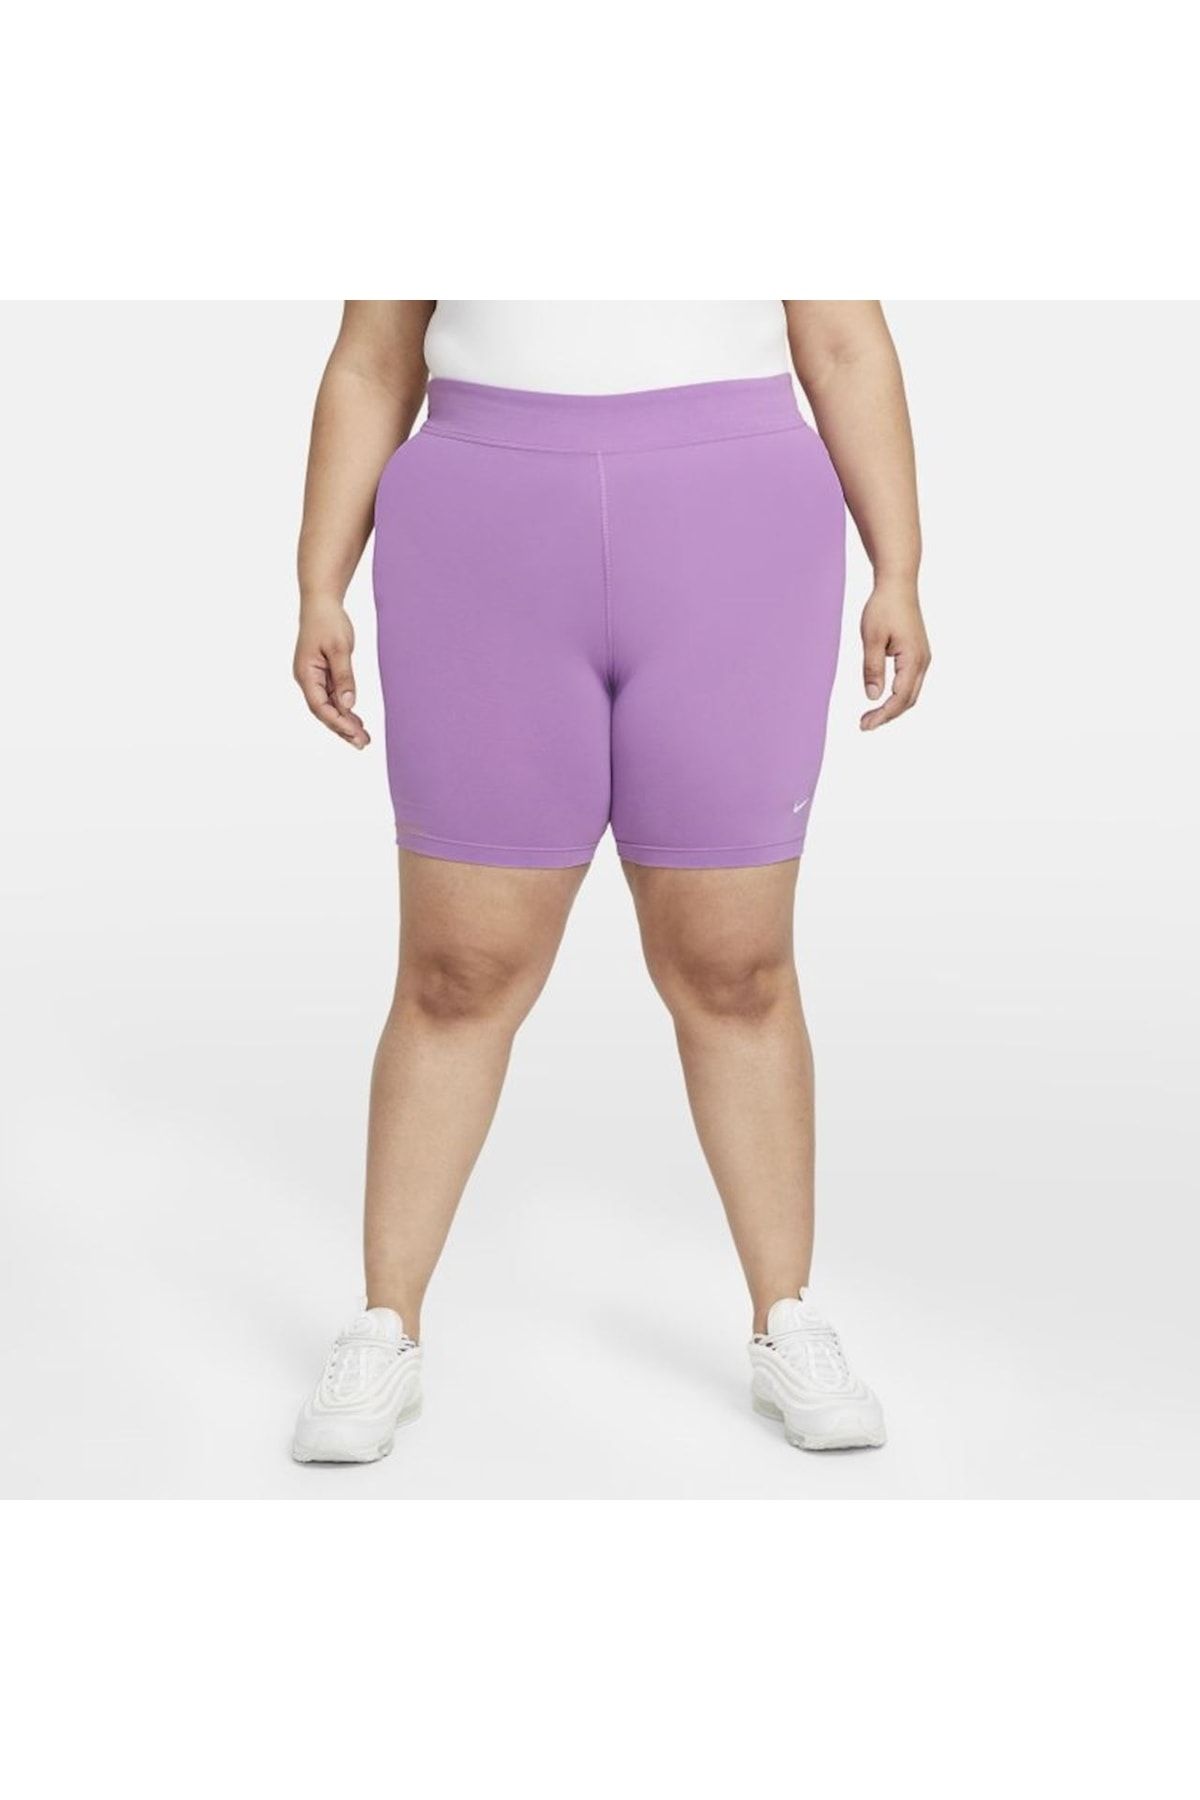 Nike Sportswear Essential Women's Mid-rise Bike Shorts Kadın Şort- Mor Dc6949-591